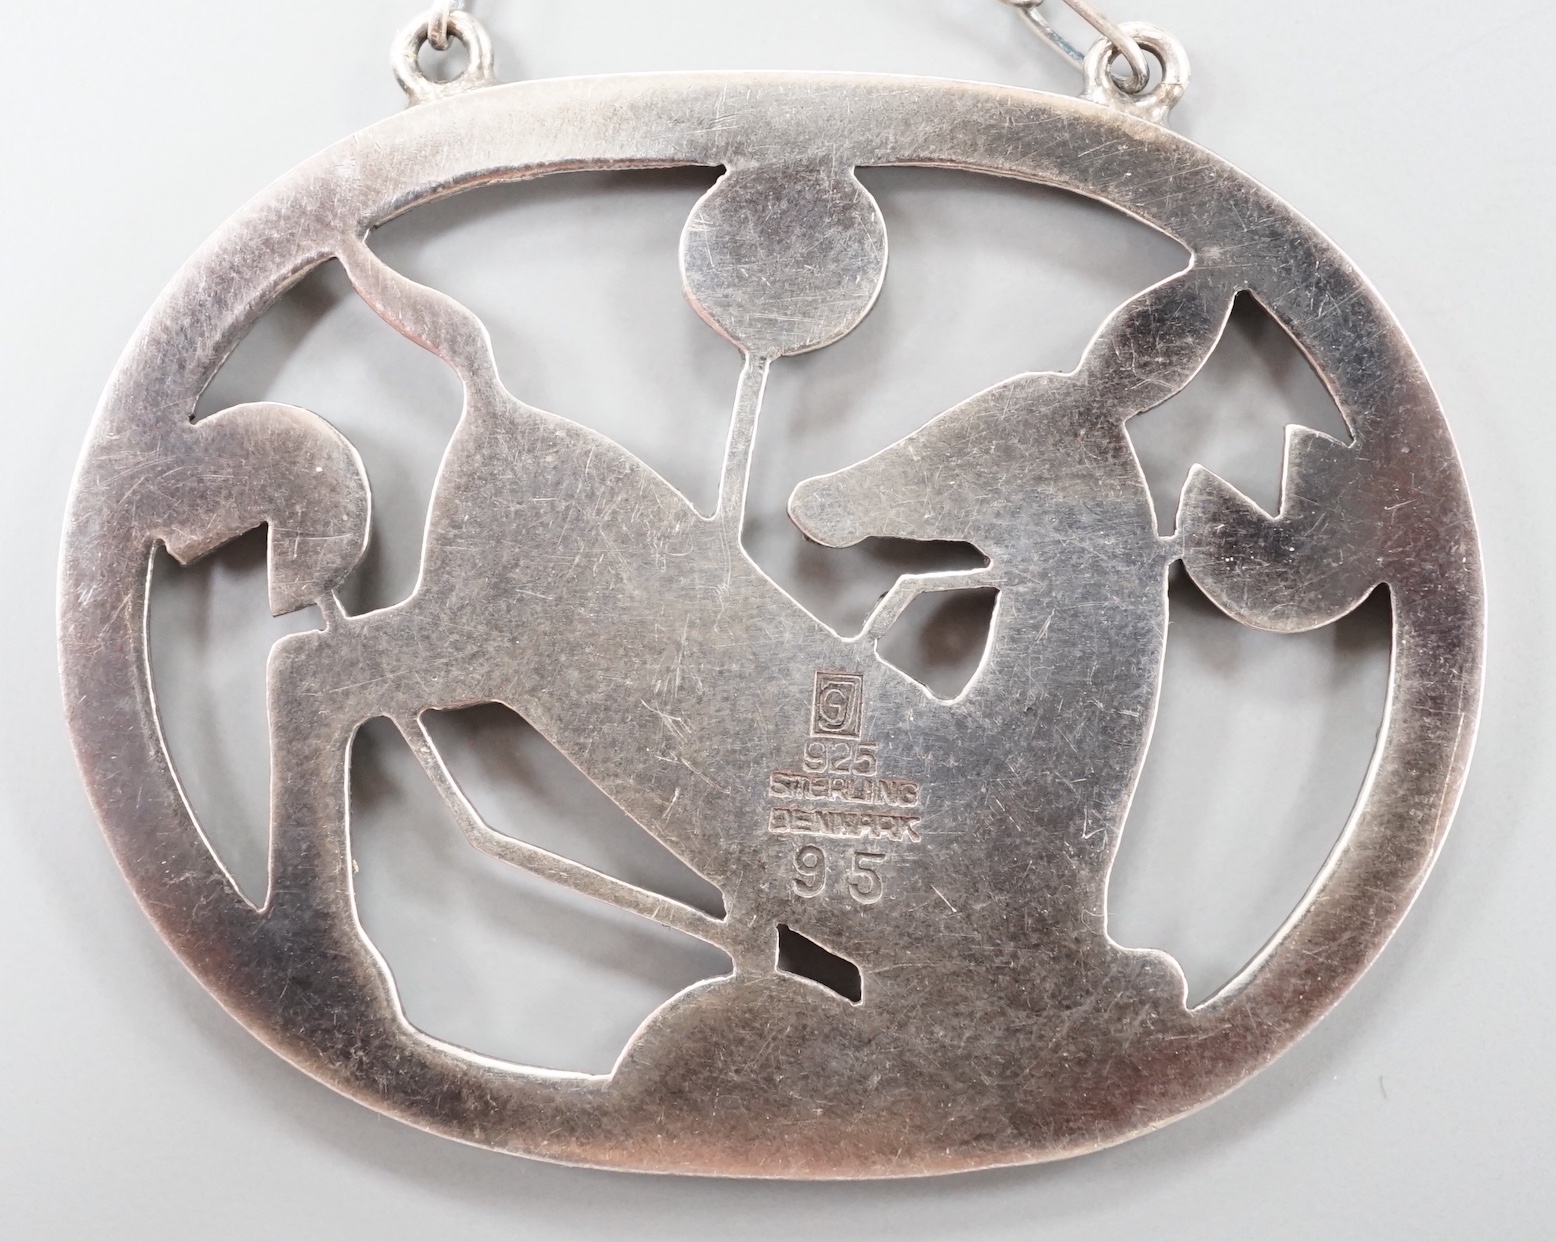 A Georg Jensen sterling 'kneeling deer' oval pendant necklace, no. 95, pendant 42mm, chain 53cm. - Image 2 of 2